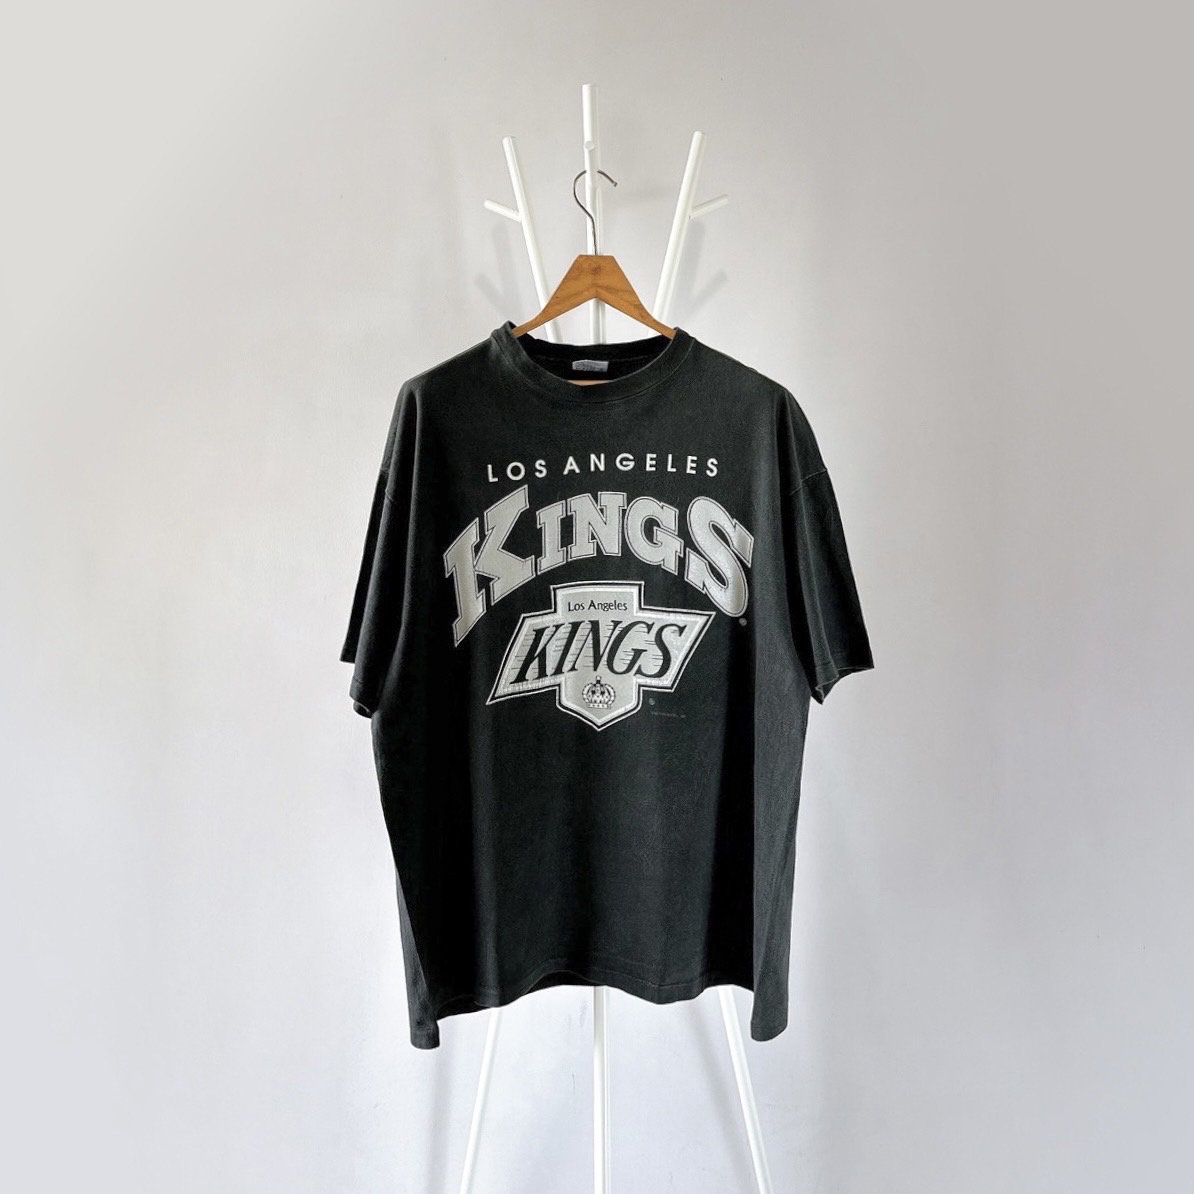 Custom La Kings Merchandise Women's Pajamas Set By Kamilahsan88